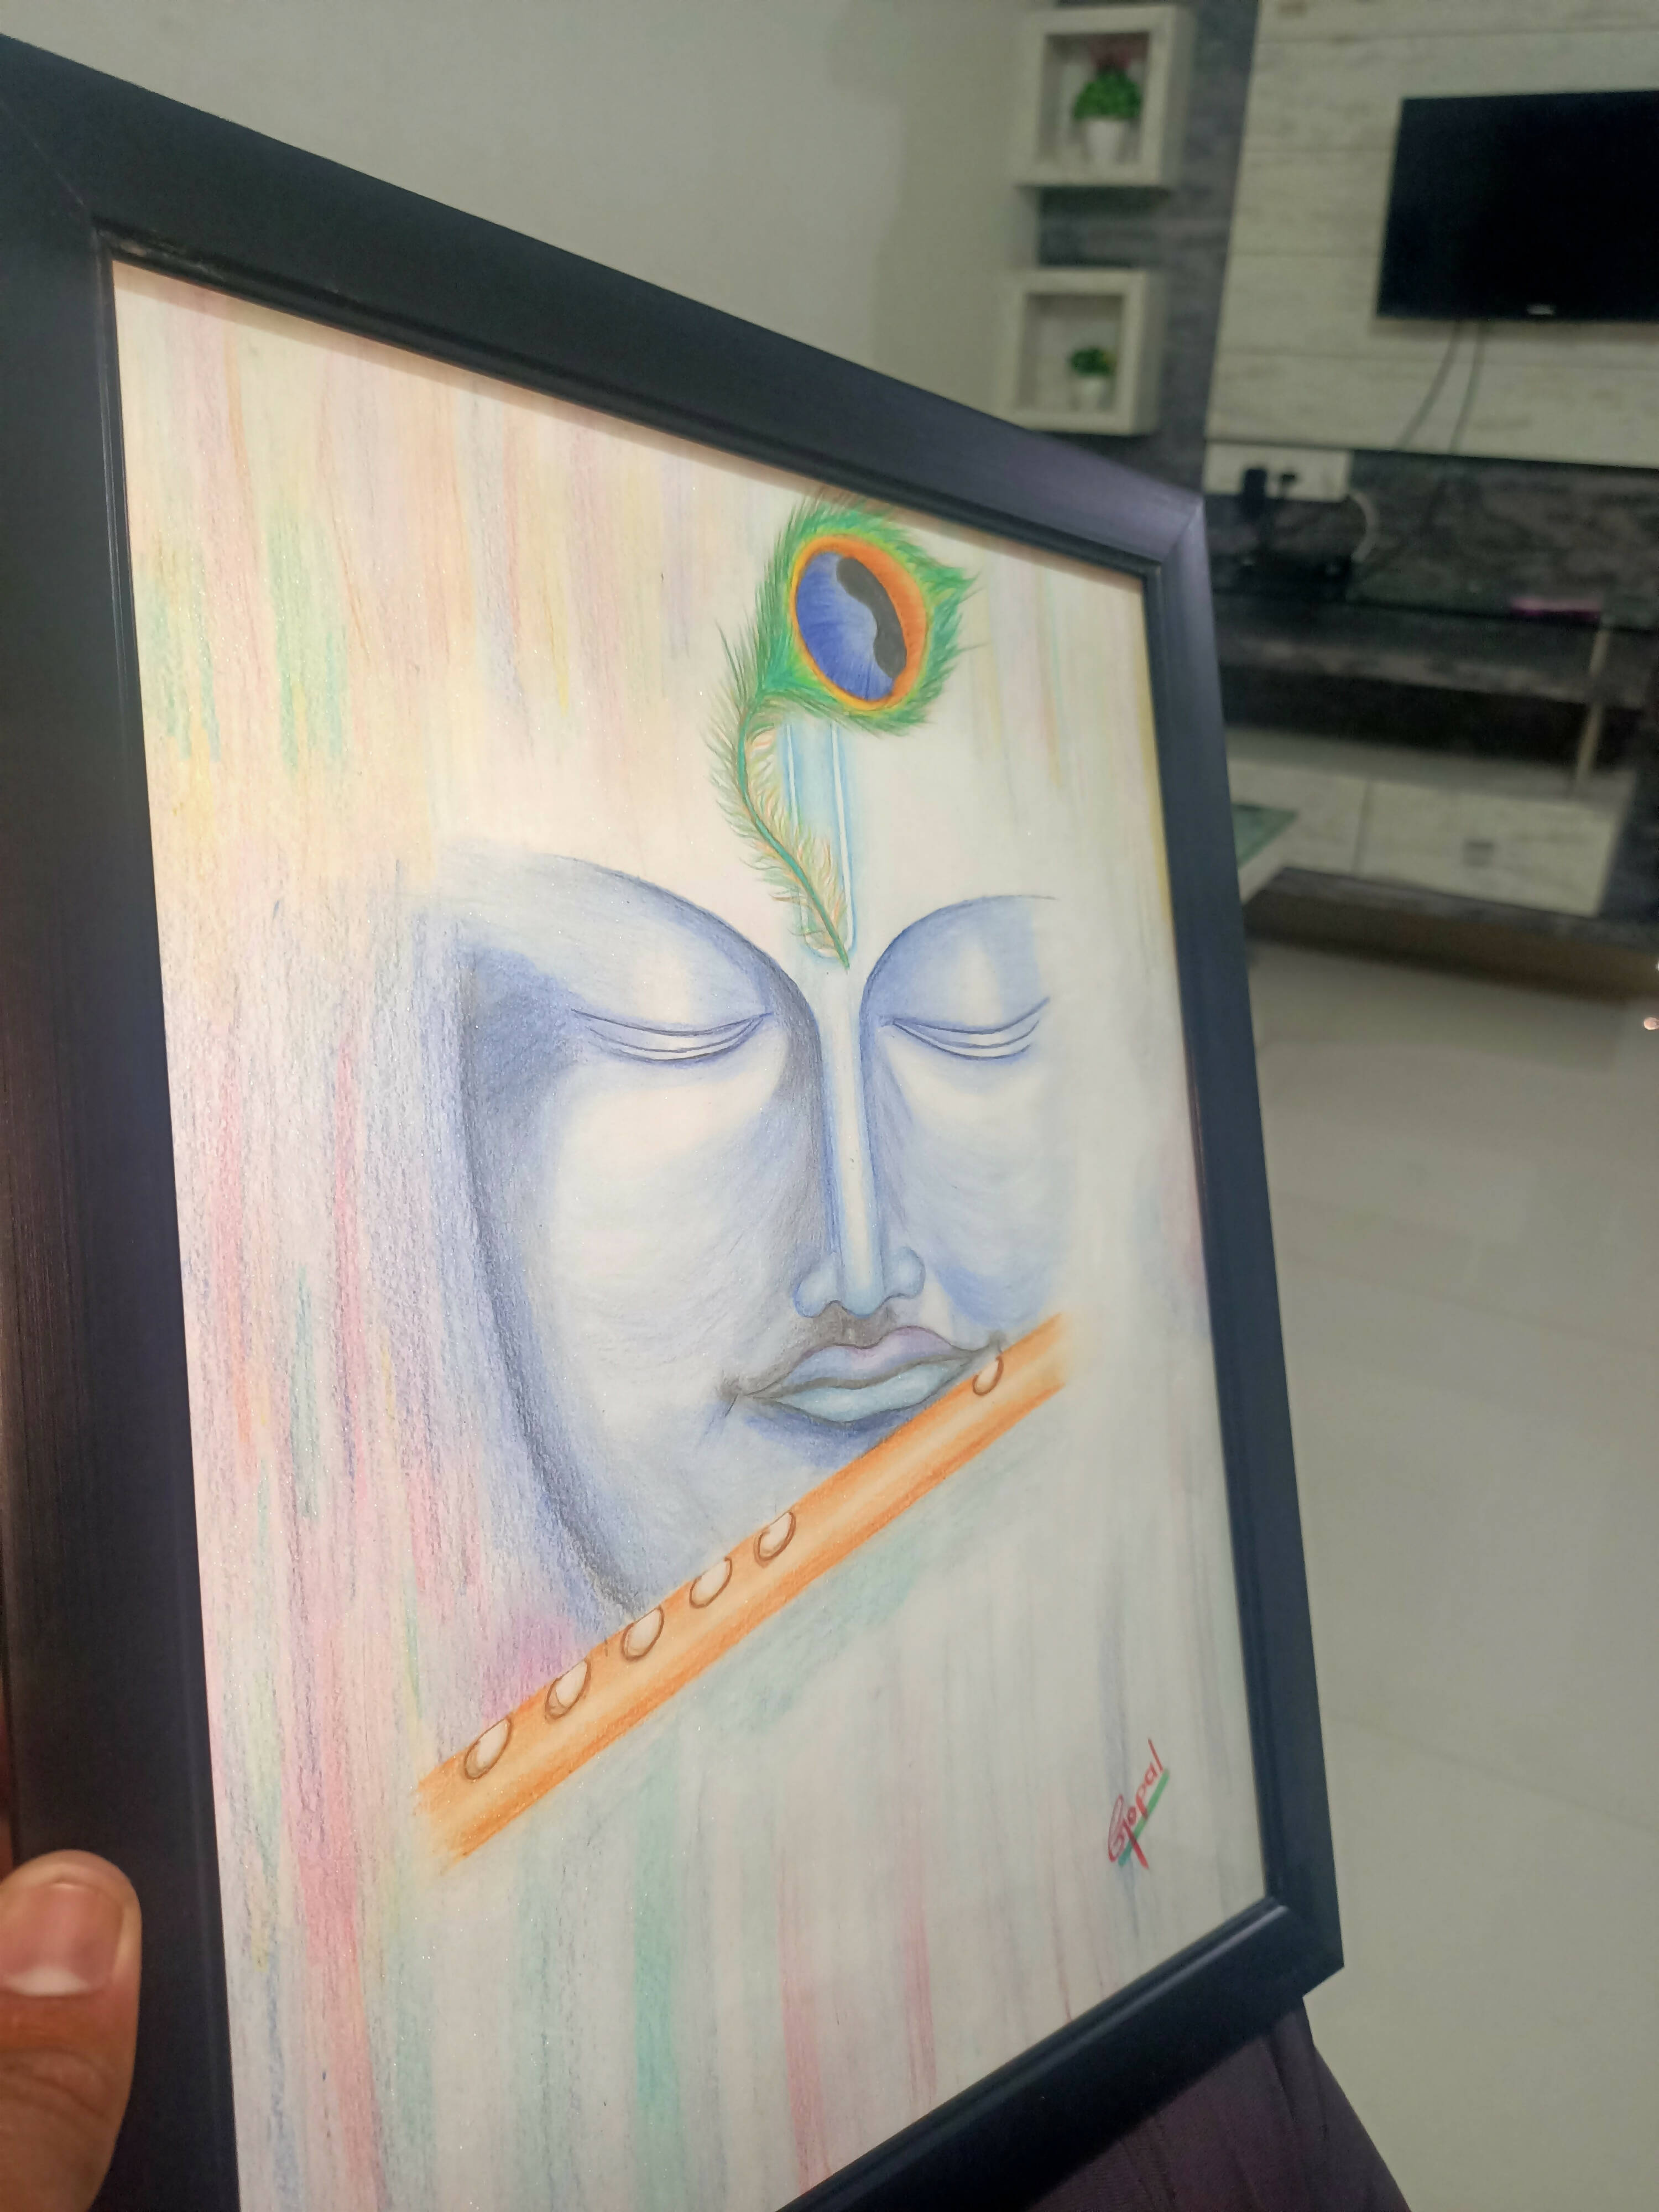 Vikas Yadav arts - Lord Shree Krishna drawing by Vikas Yadav arts uploaded  on YOUTUBE video link https://youtu.be/uiz5A2yL8AQ | Facebook